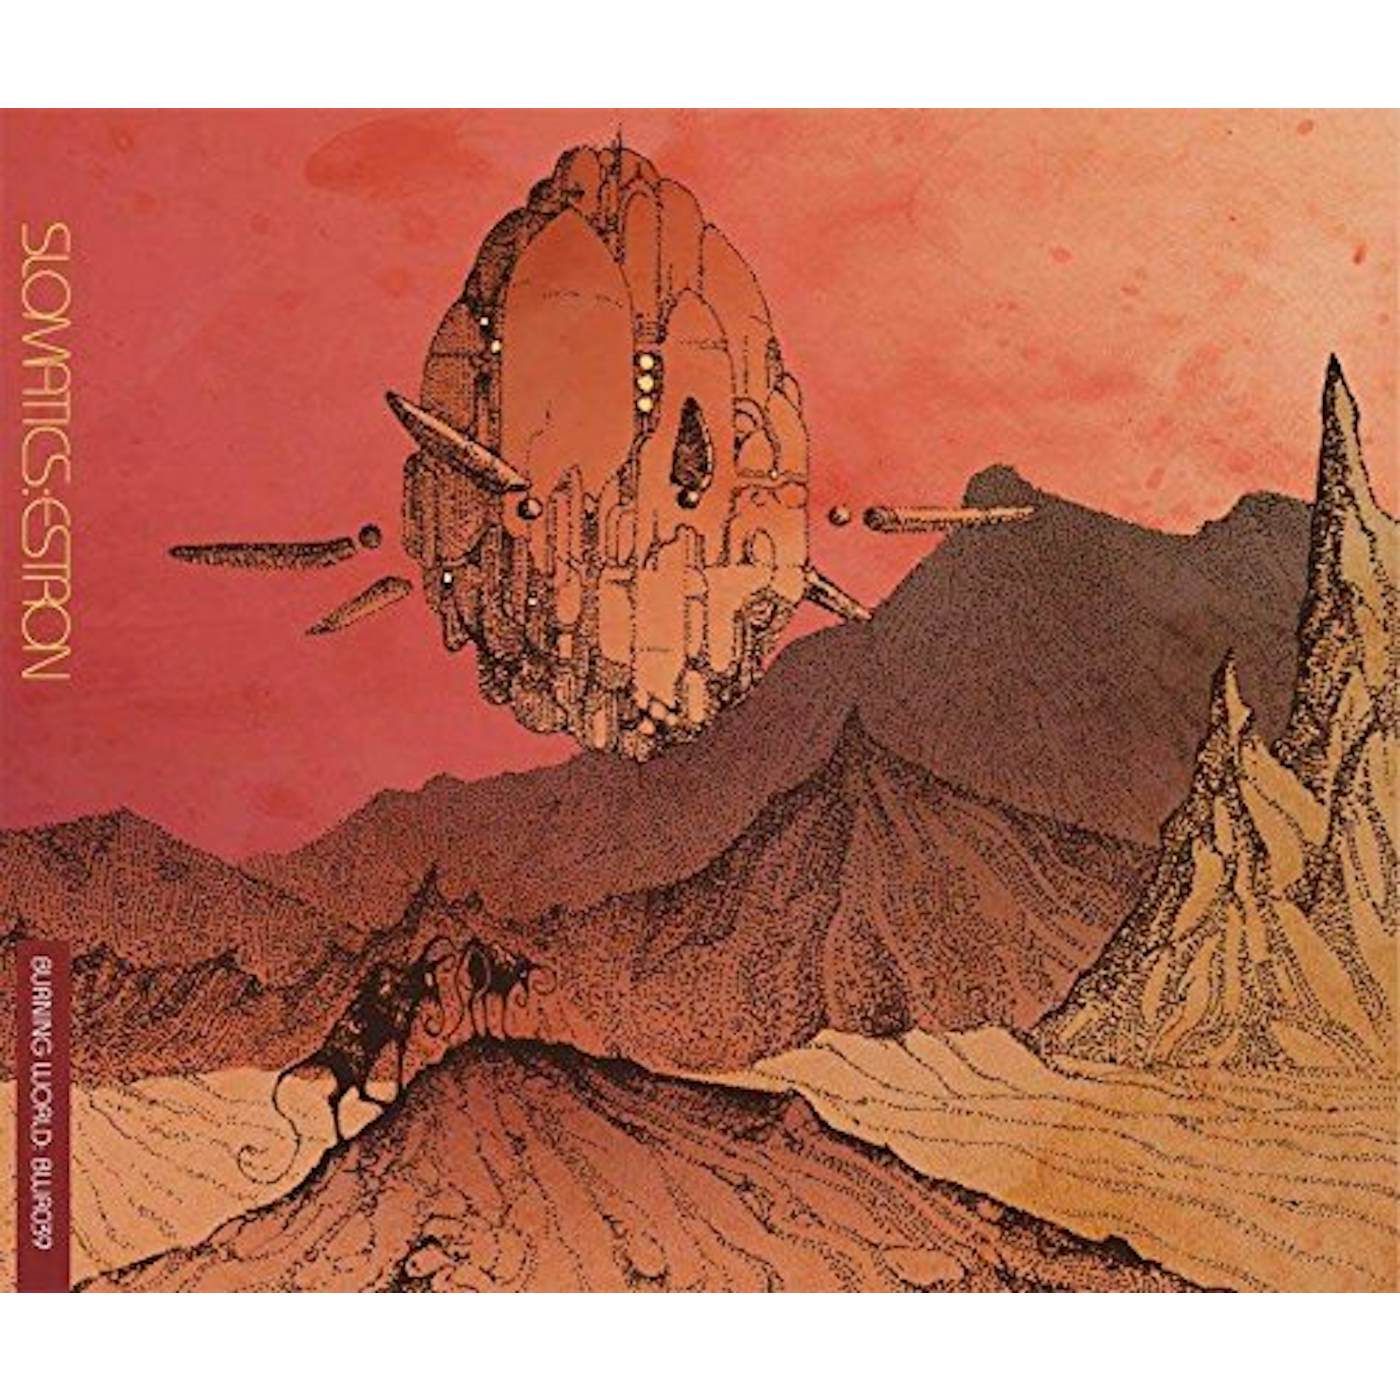 Slomatics ESTRON-ORANGE VINYL VERSION Vinyl Record - Colored Vinyl, UK Release